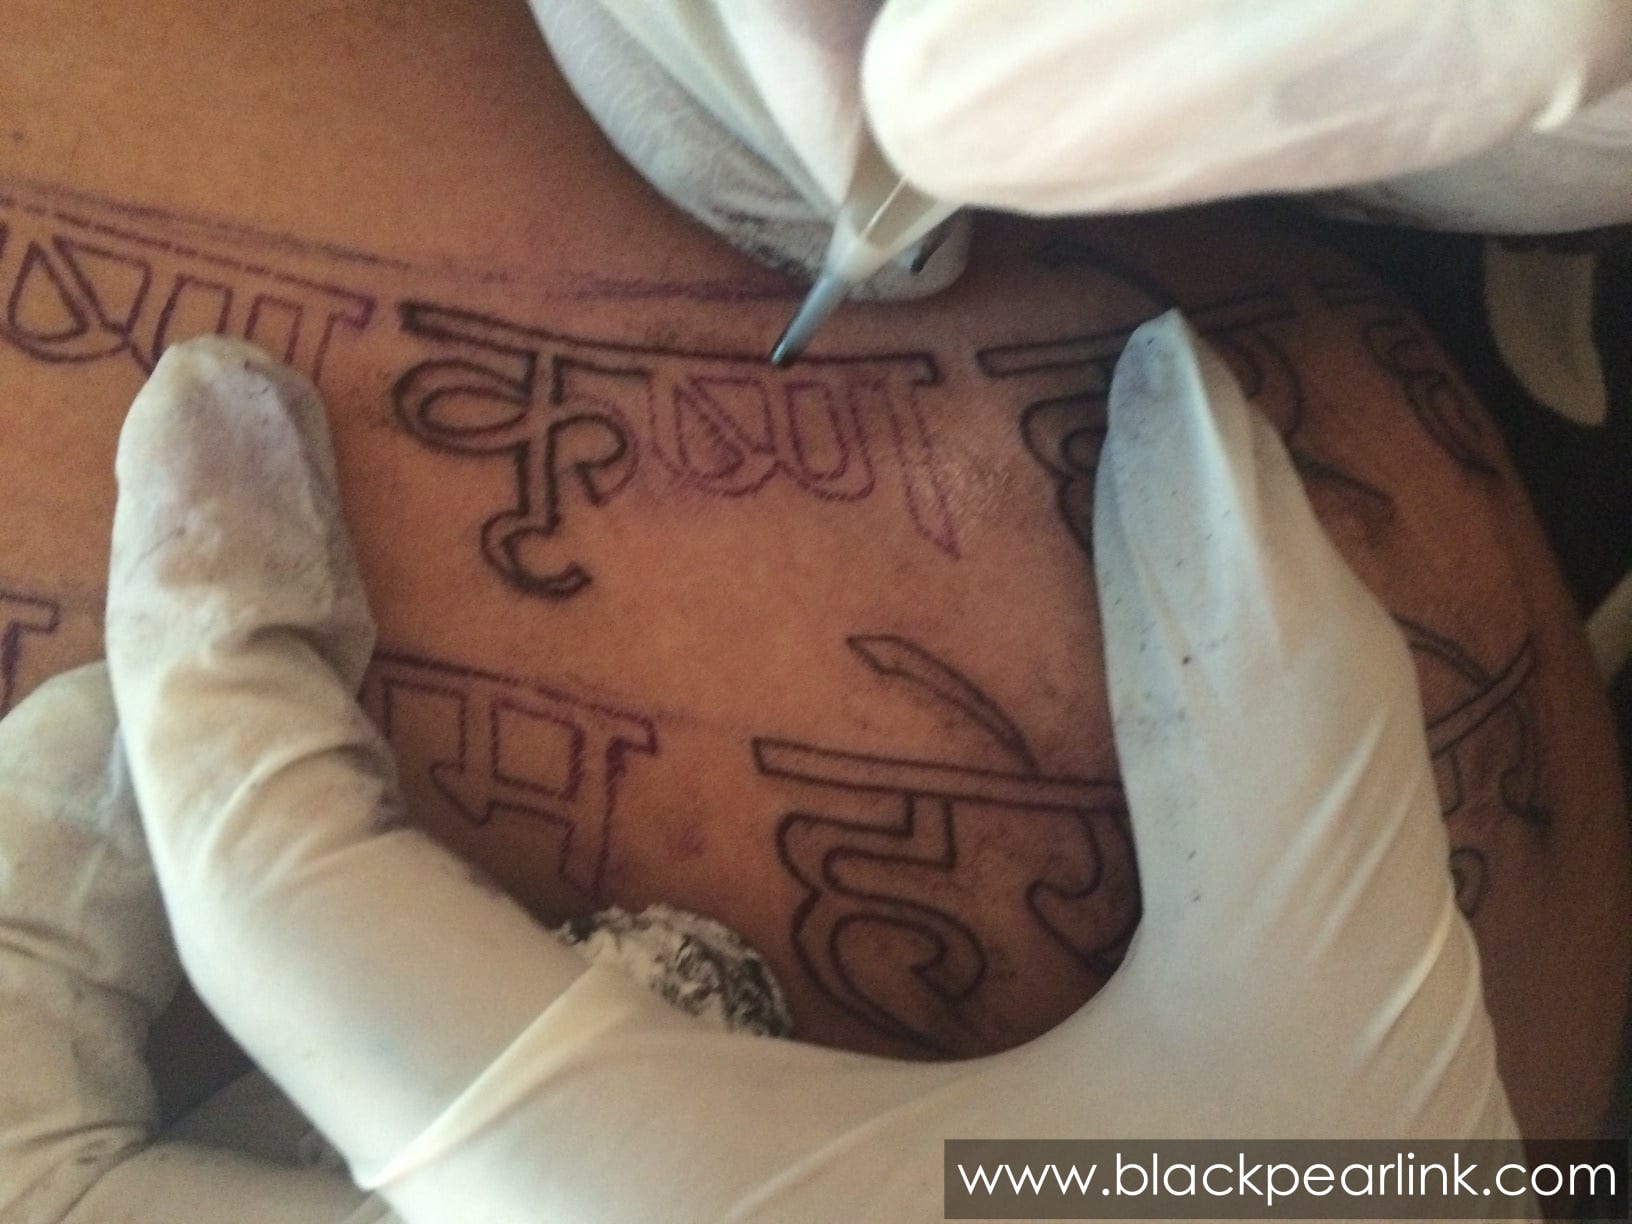 Pap of ur tattoo | ask.fmhttps://ask.fm/karanluvlordkrishna